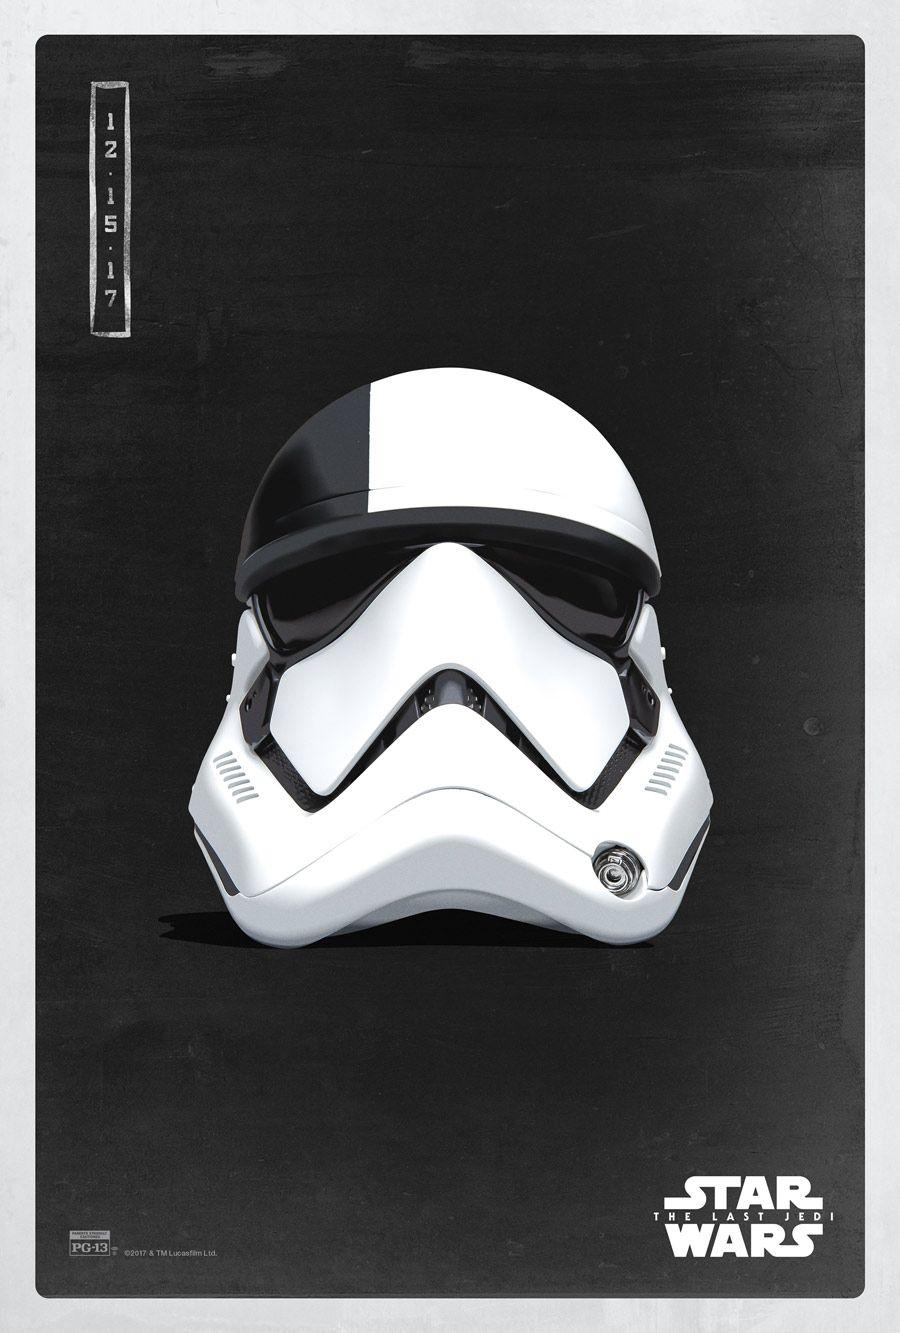 First Order stormtrooper executioner helmet. Star wars art